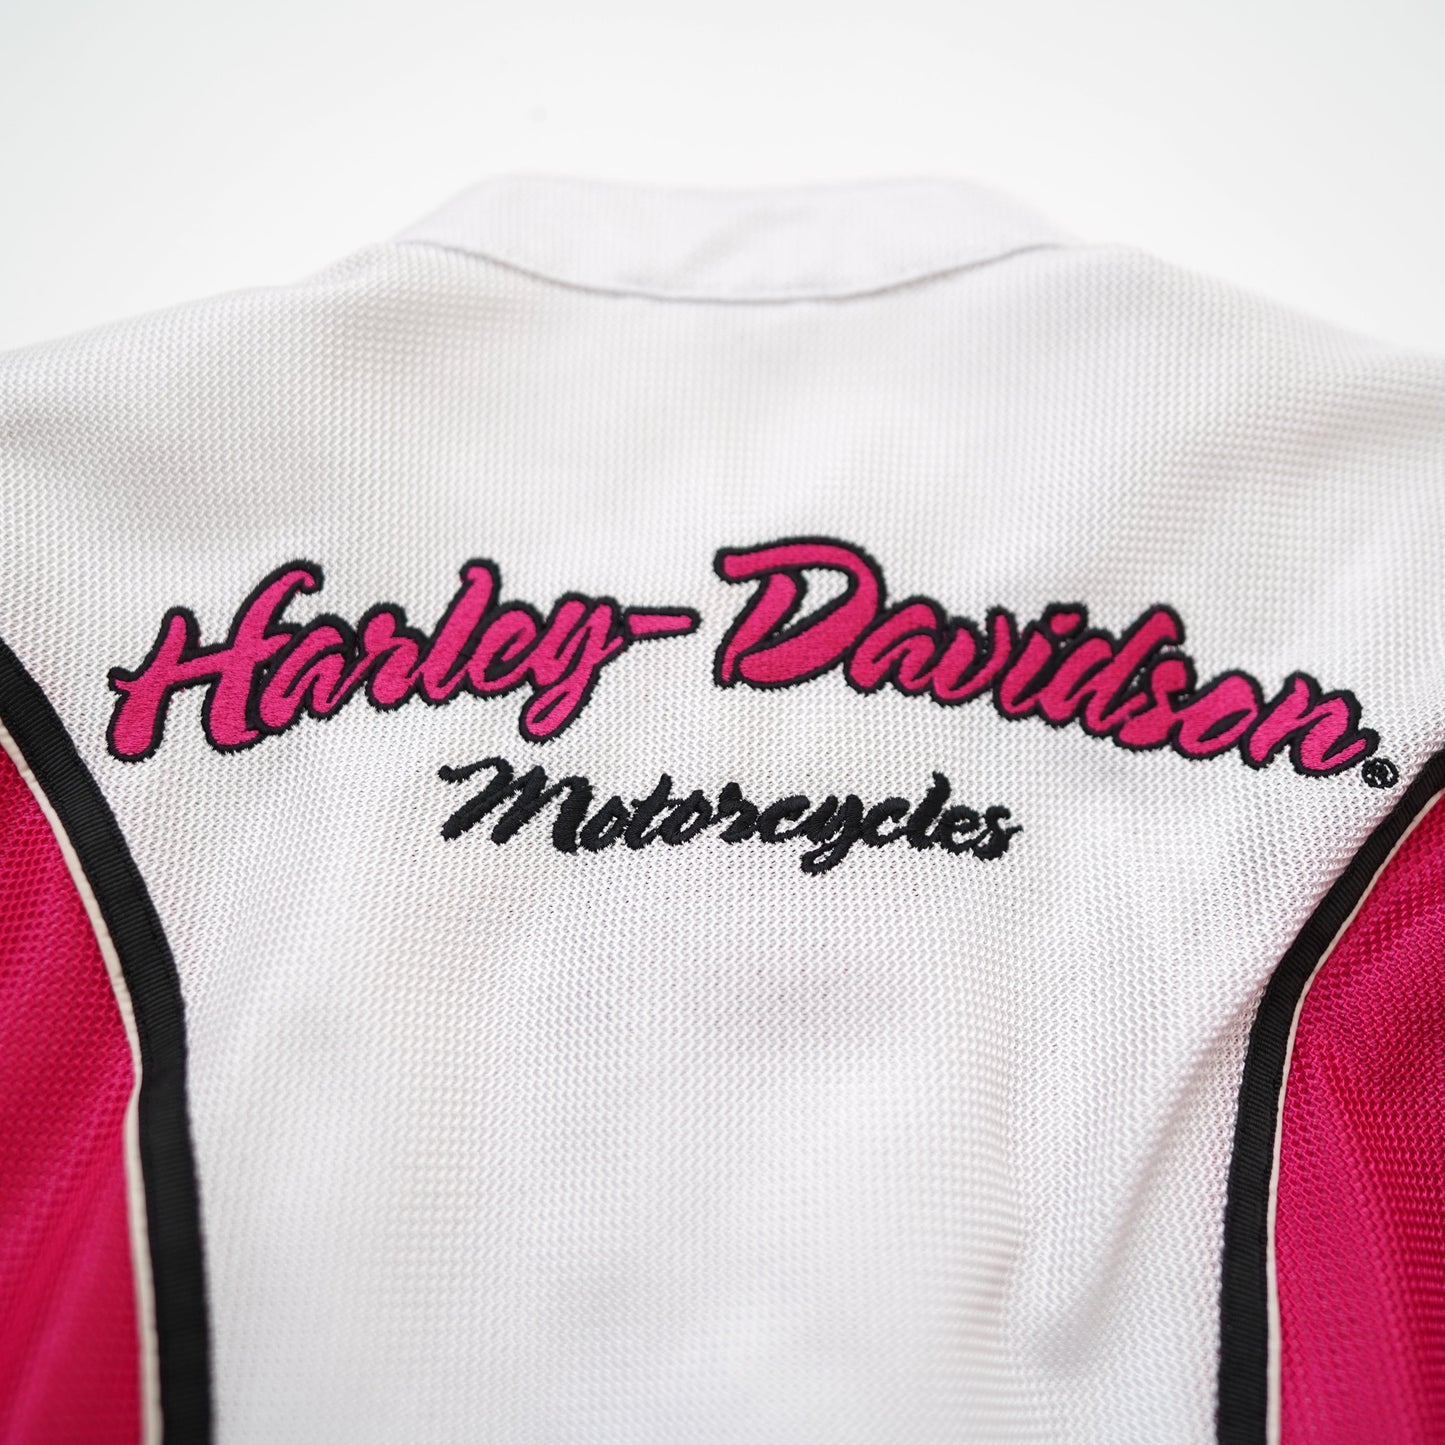 HARLEY DAVIDSON racing jacket